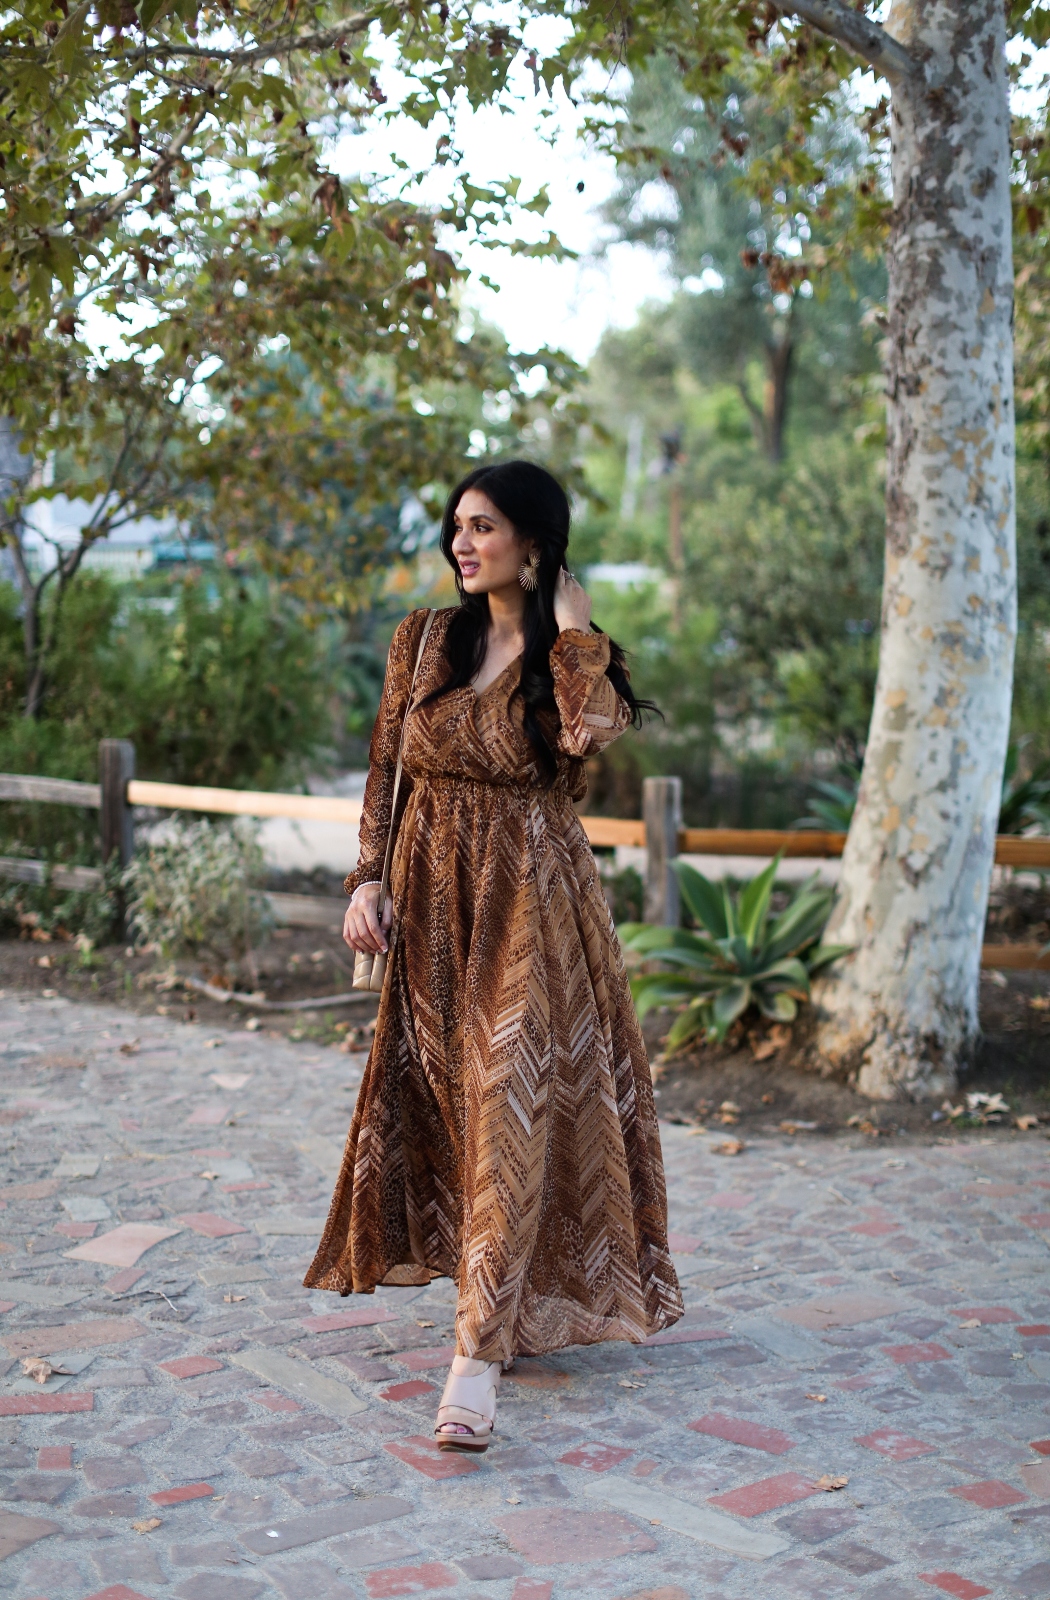 Debbie Savage Orange County California Fashion Blogger Adyson Parker V-Neck Long Sleeve Print Dress Brown Dresses for Fall 